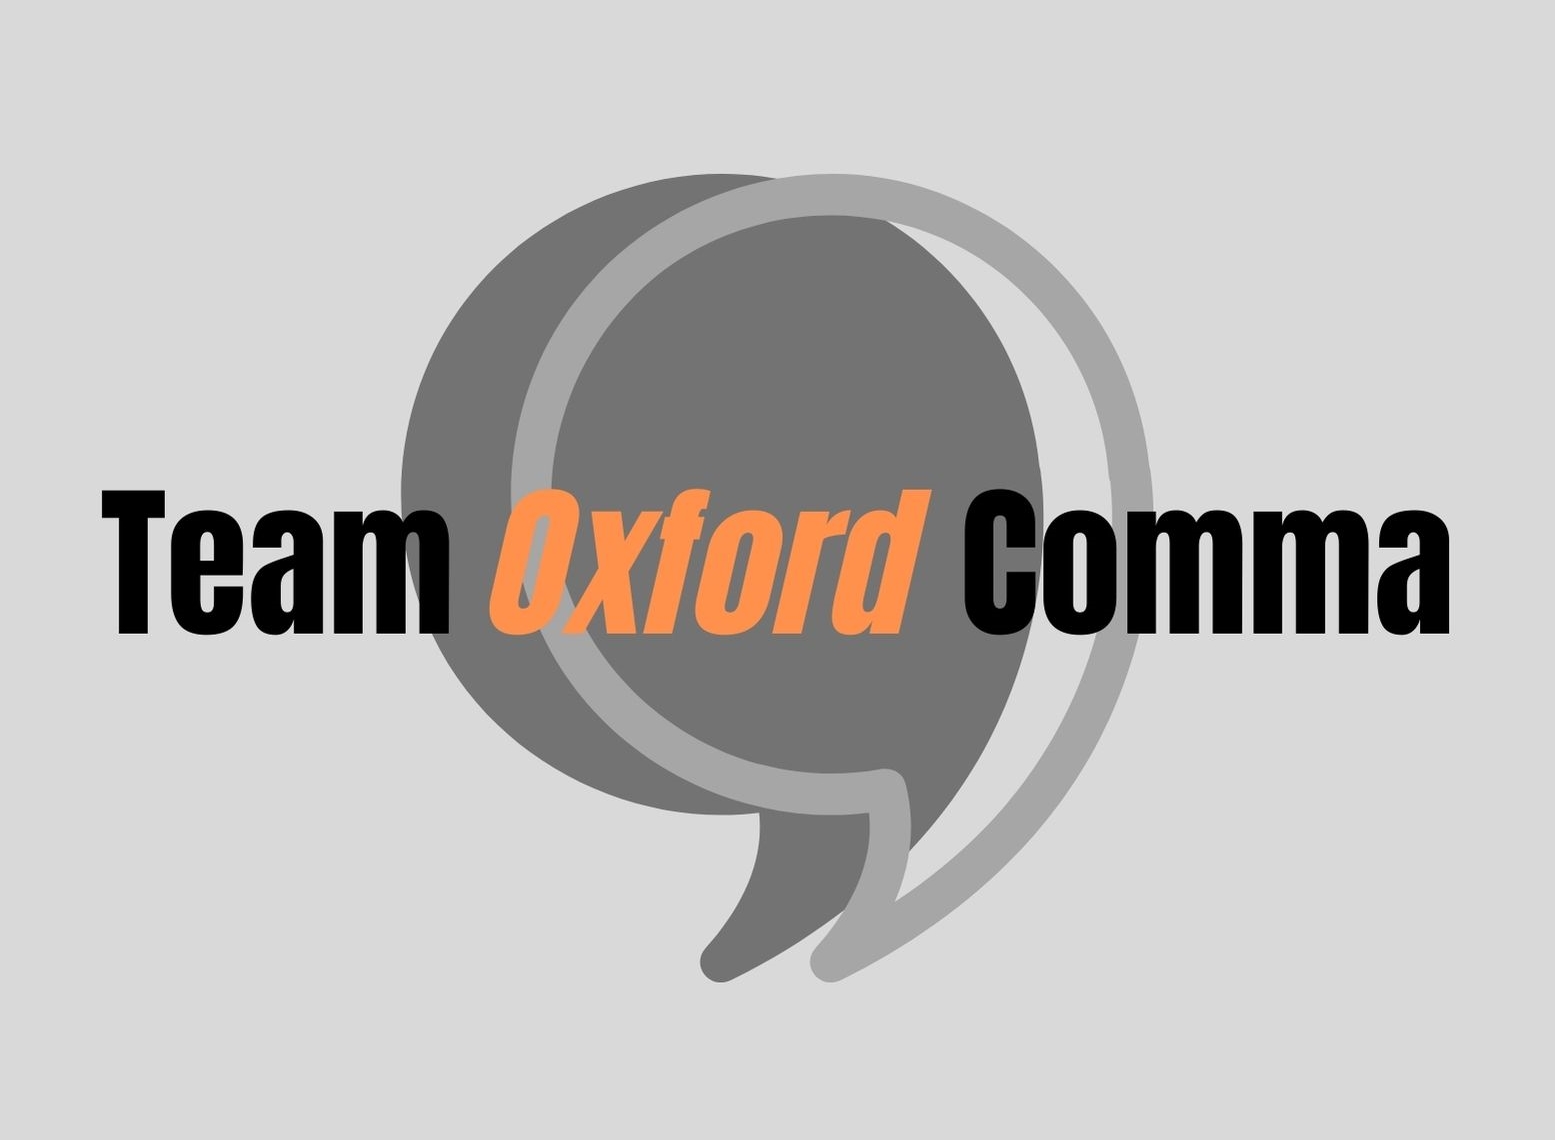 Team Oxford Comma Infographic